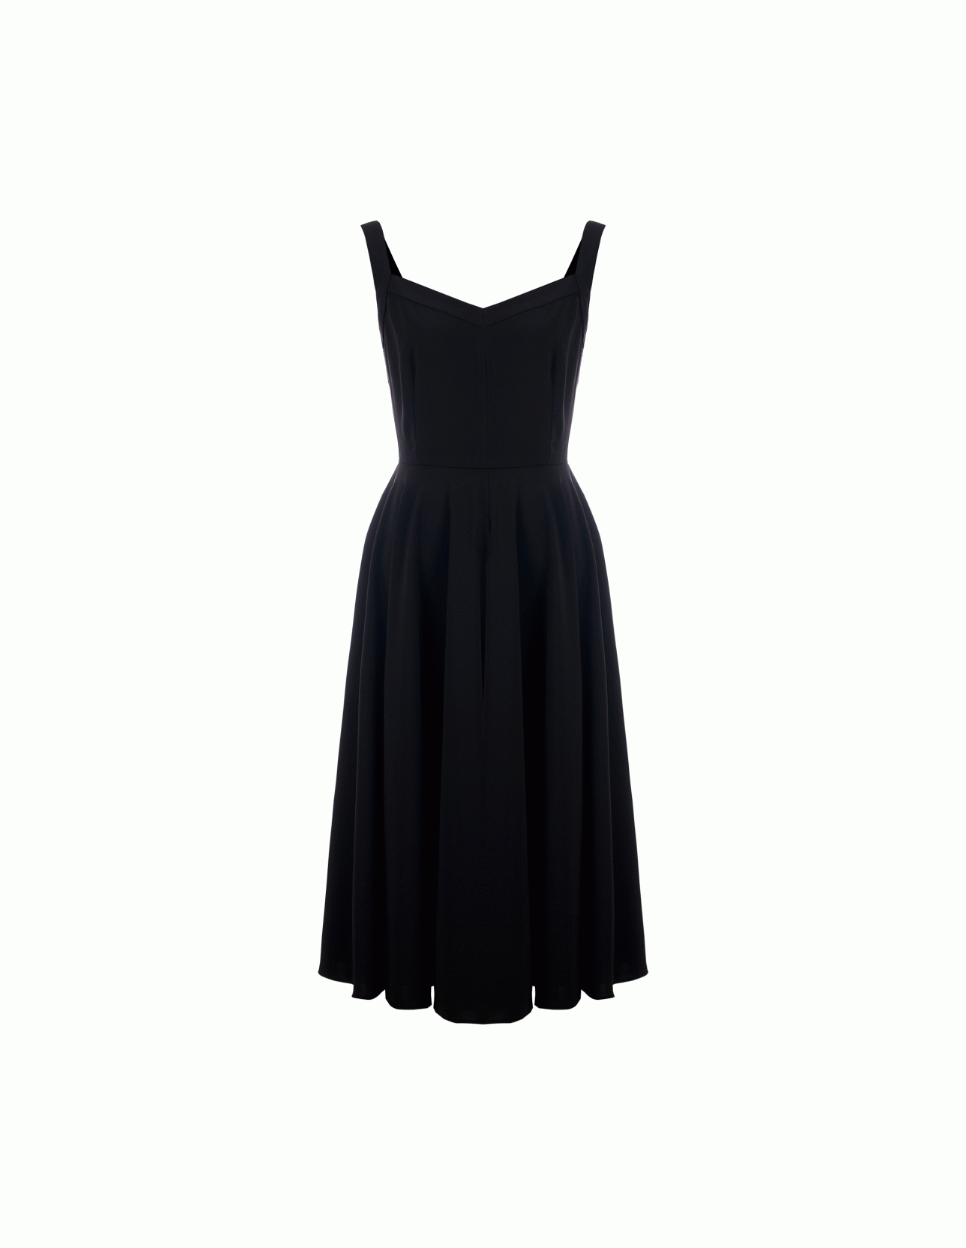 [SAMPLE] V Flare Black Dress